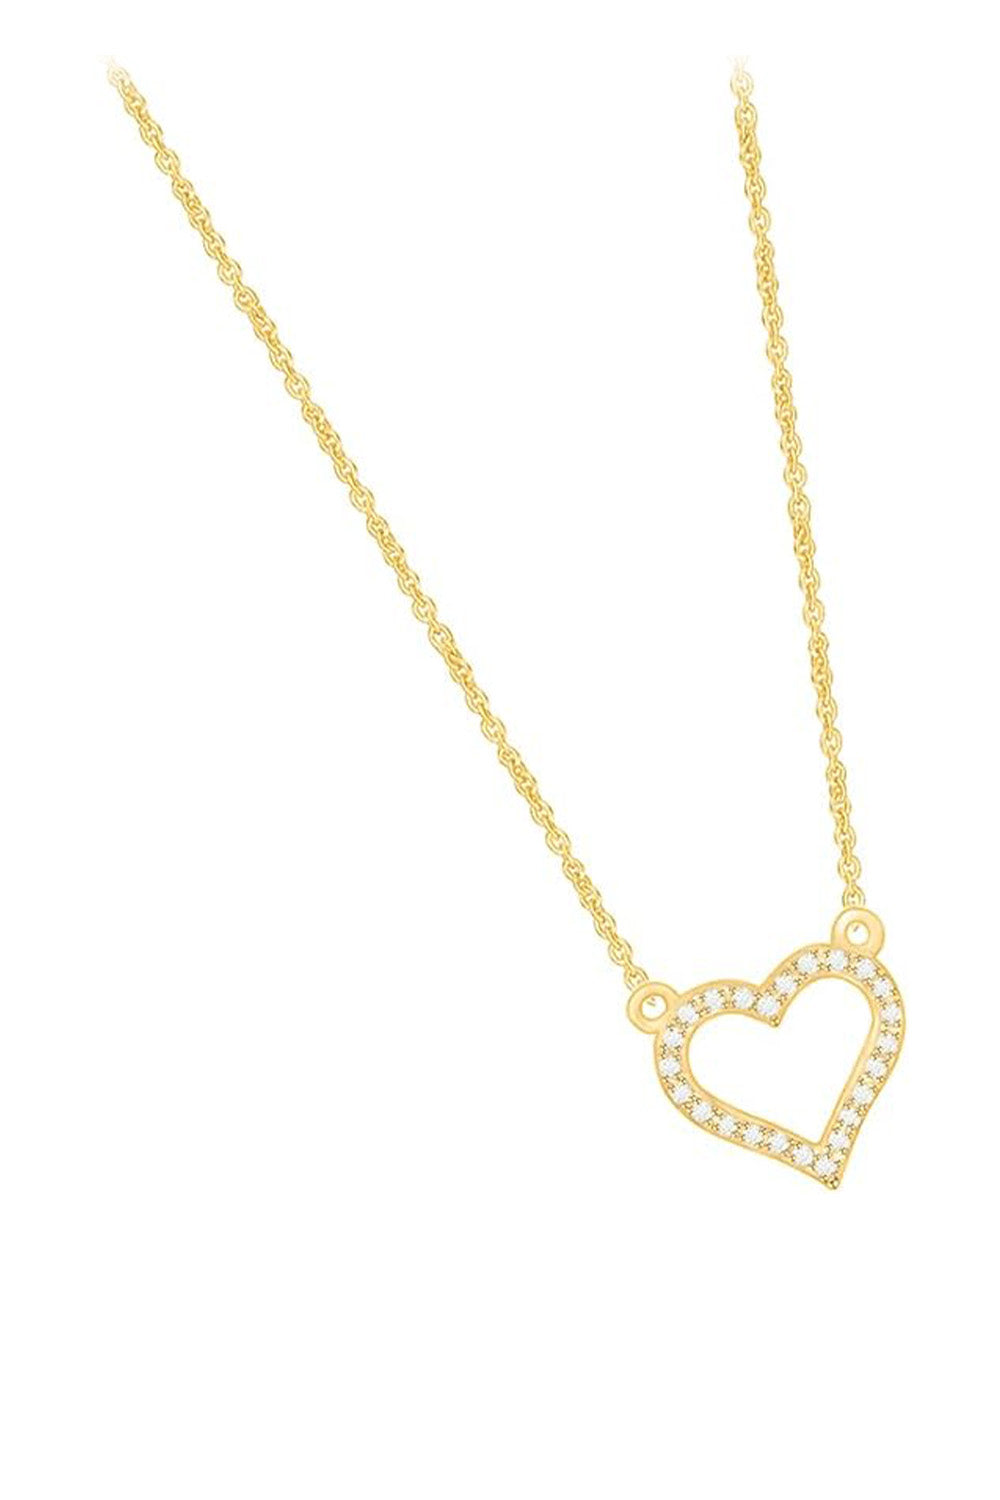 Yellow Gold Color Open Heart Pendant Necklace, Pendant For Women